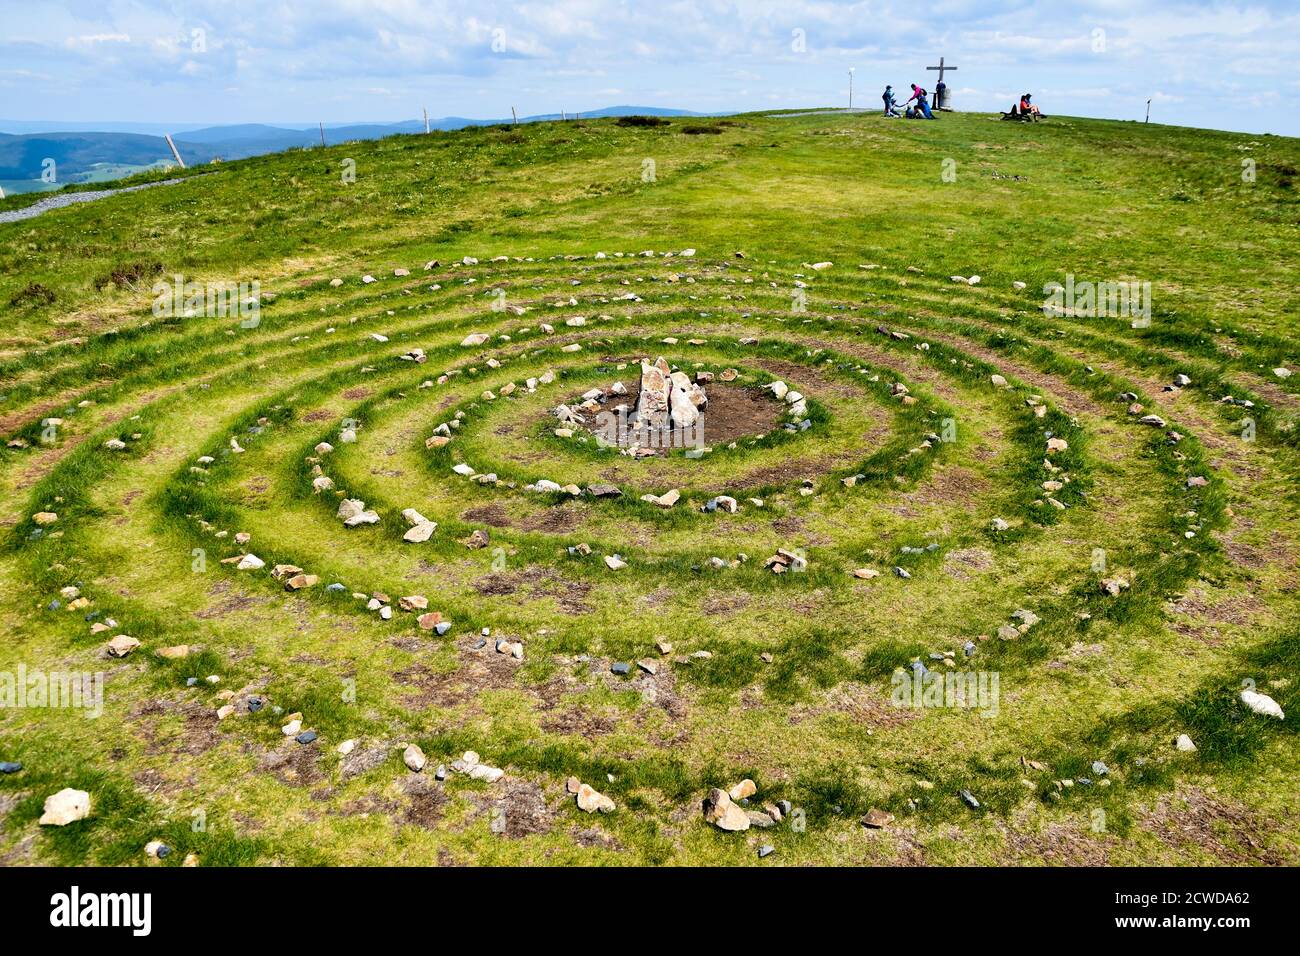 Espiral celta mágica de la vida hecha de rocas en la naturaleza. Foto de stock